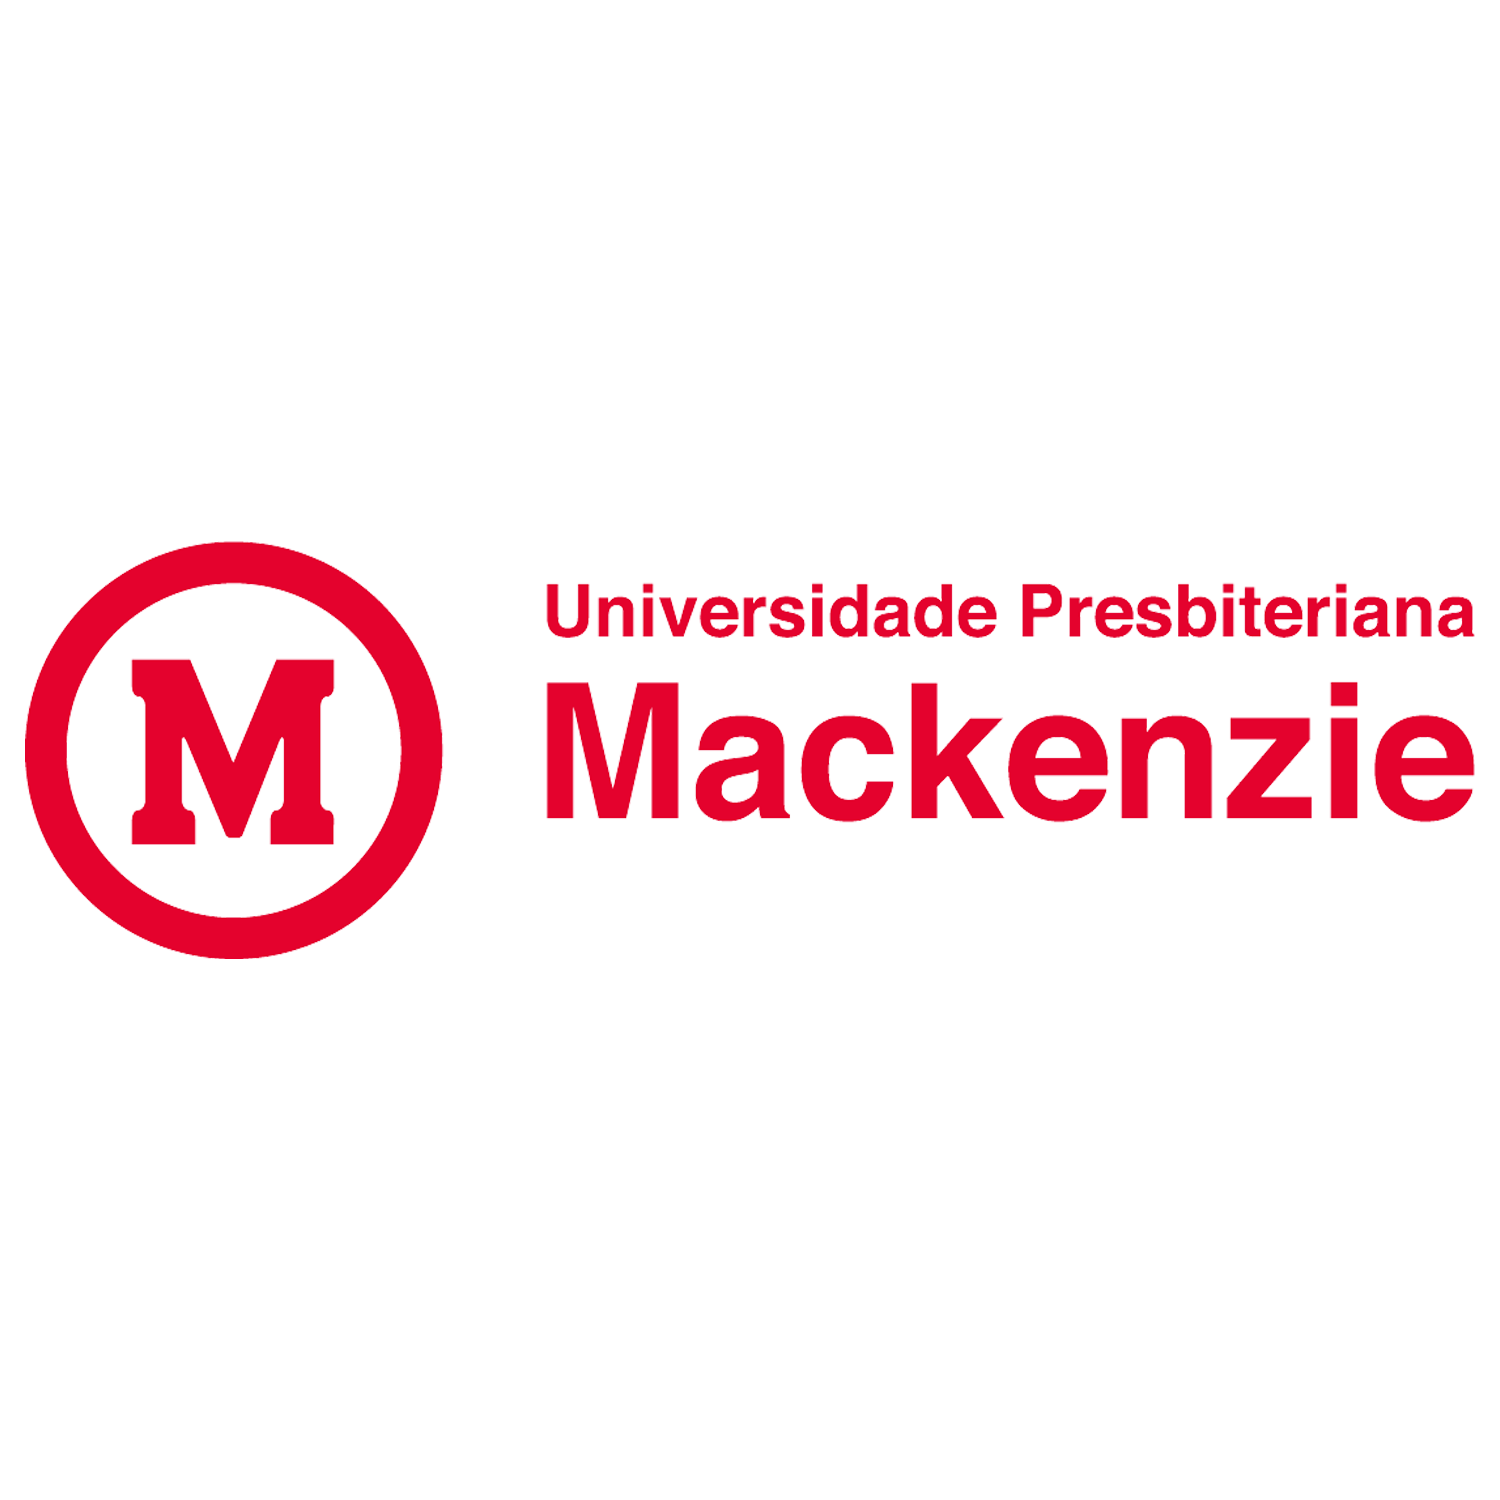 MacKenzie Presbyterian University